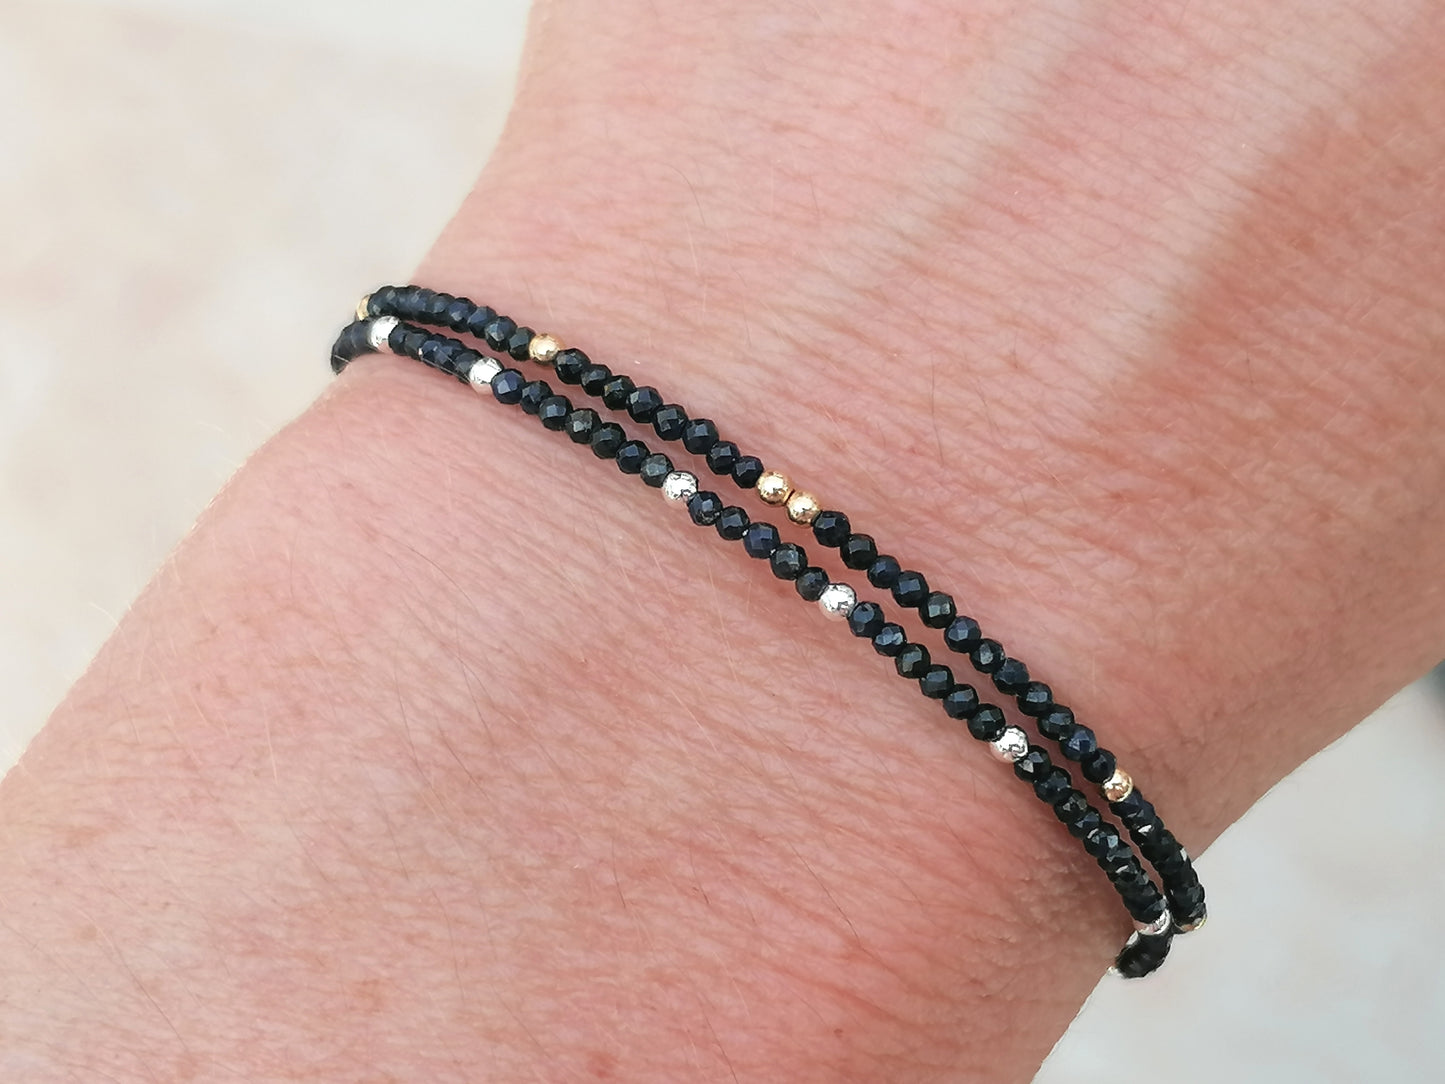 Skinny sapphire bracelet in sterling silver or gold.